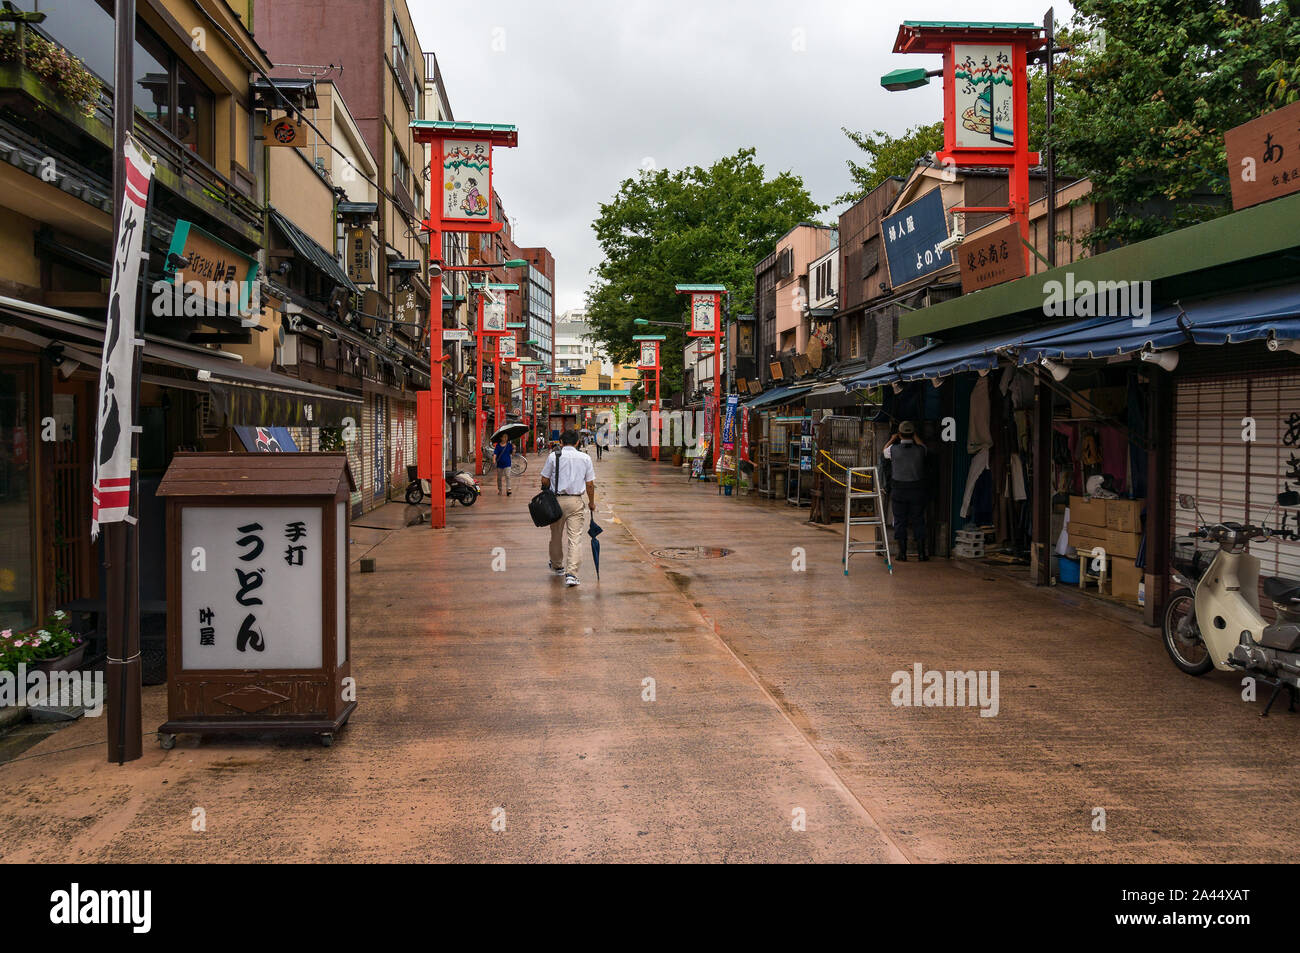 Tokyo, Japan - Aug 29, 2016: side street with Kanoya Udon Shop (text on billboard) and souvenir shops near Senso-ji temple, Asakusa district. Small st Stock Photo